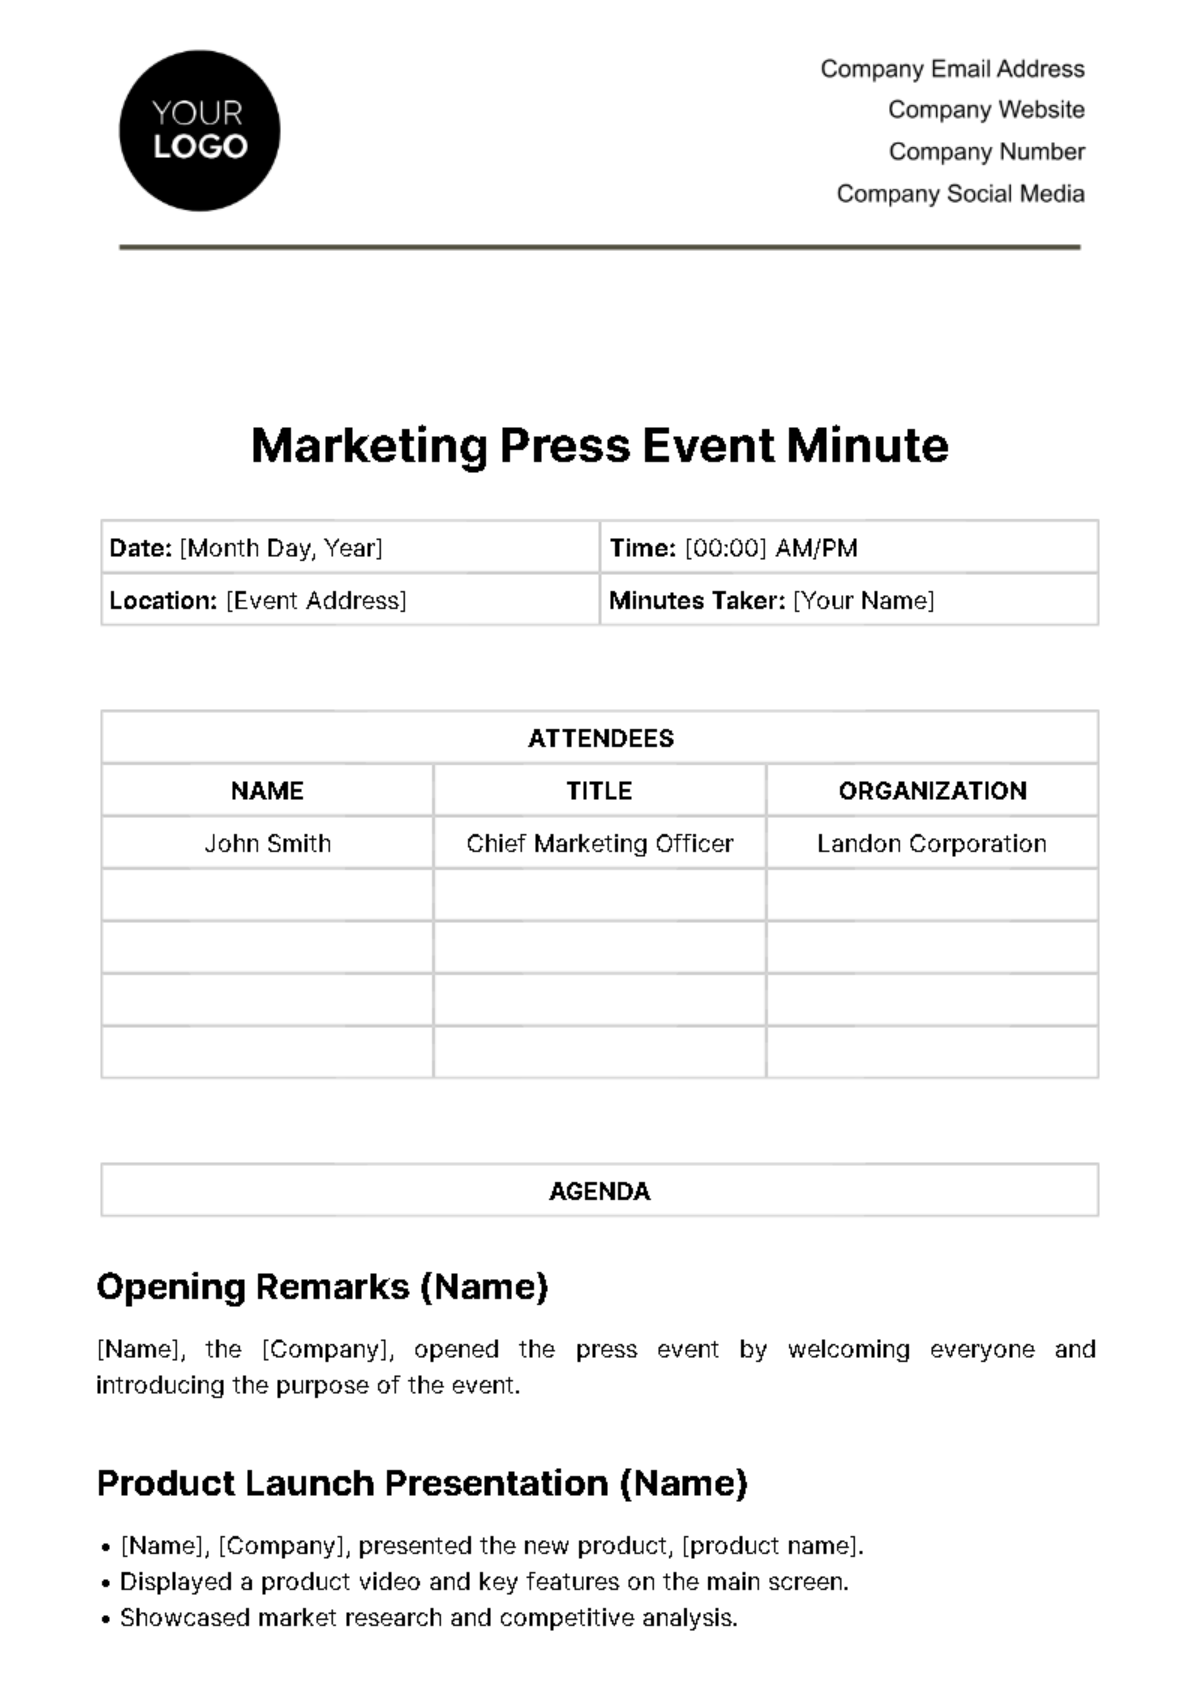 Marketing Press Event Minute Template